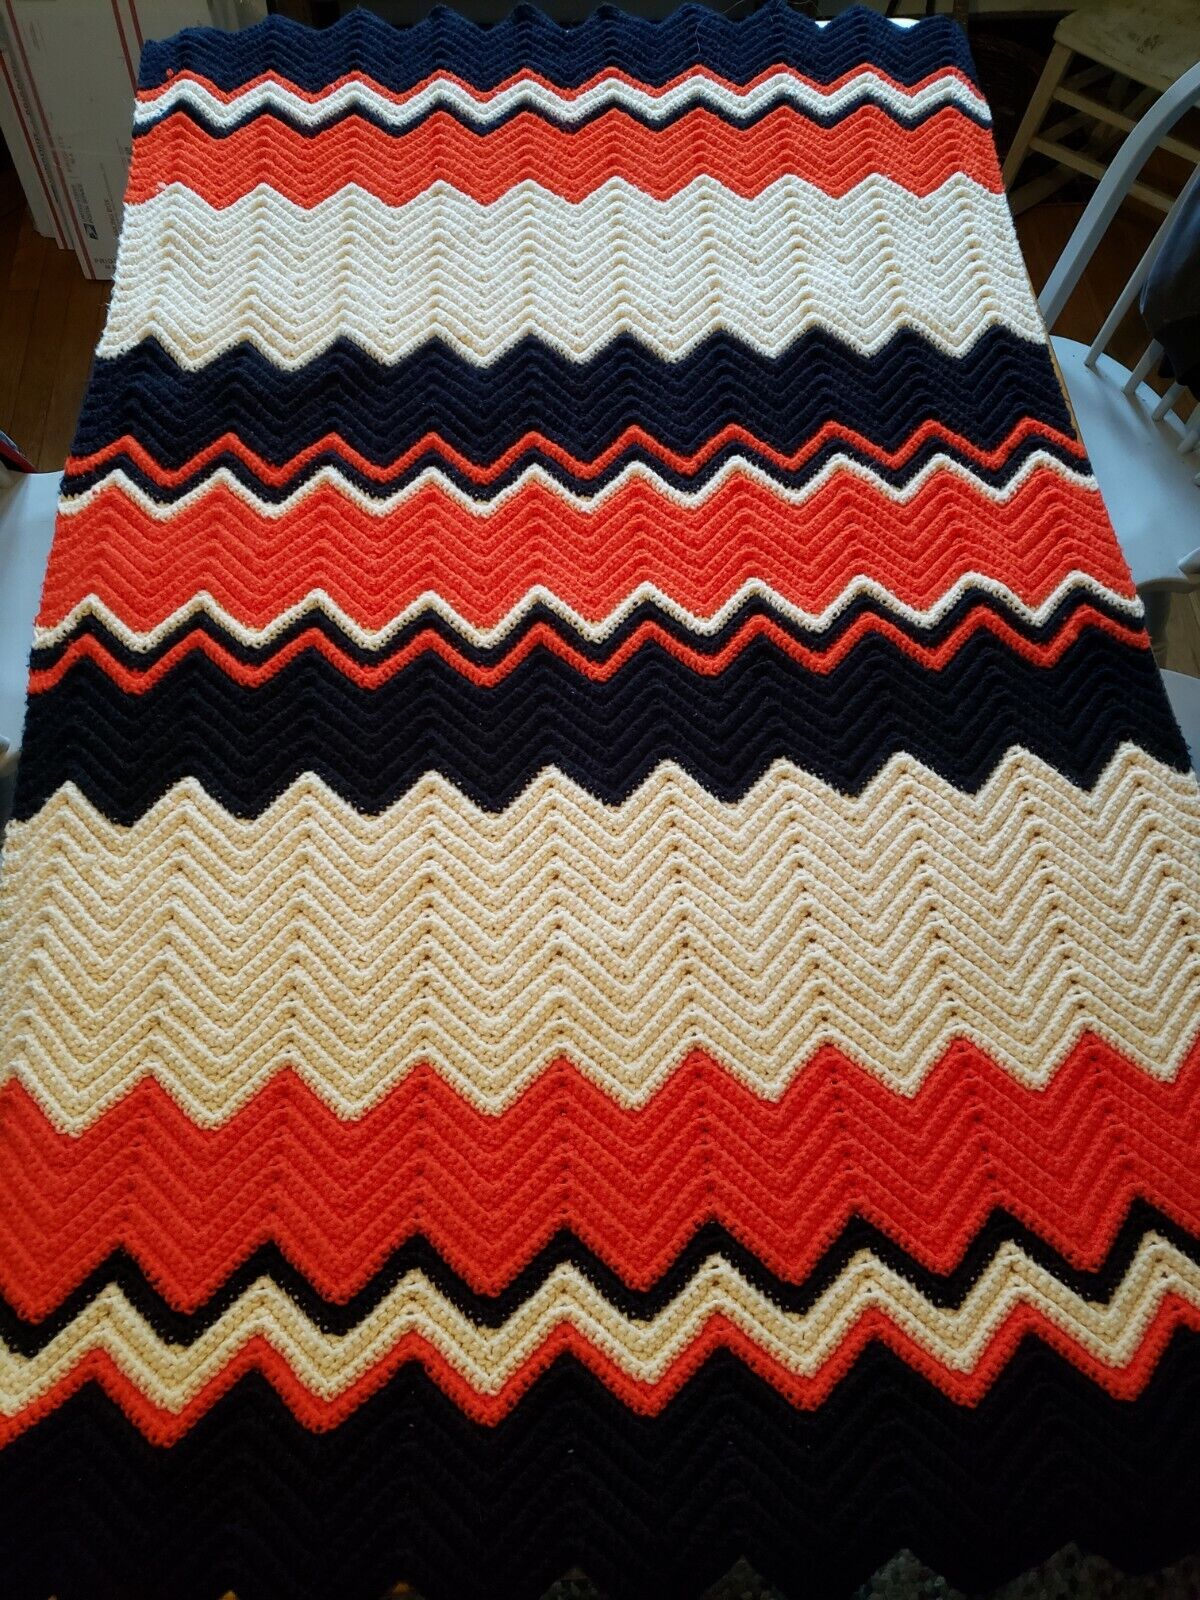 Vintage Crochetd/ Knitted Banket, 38 By 60, Orange, Black, And Cream